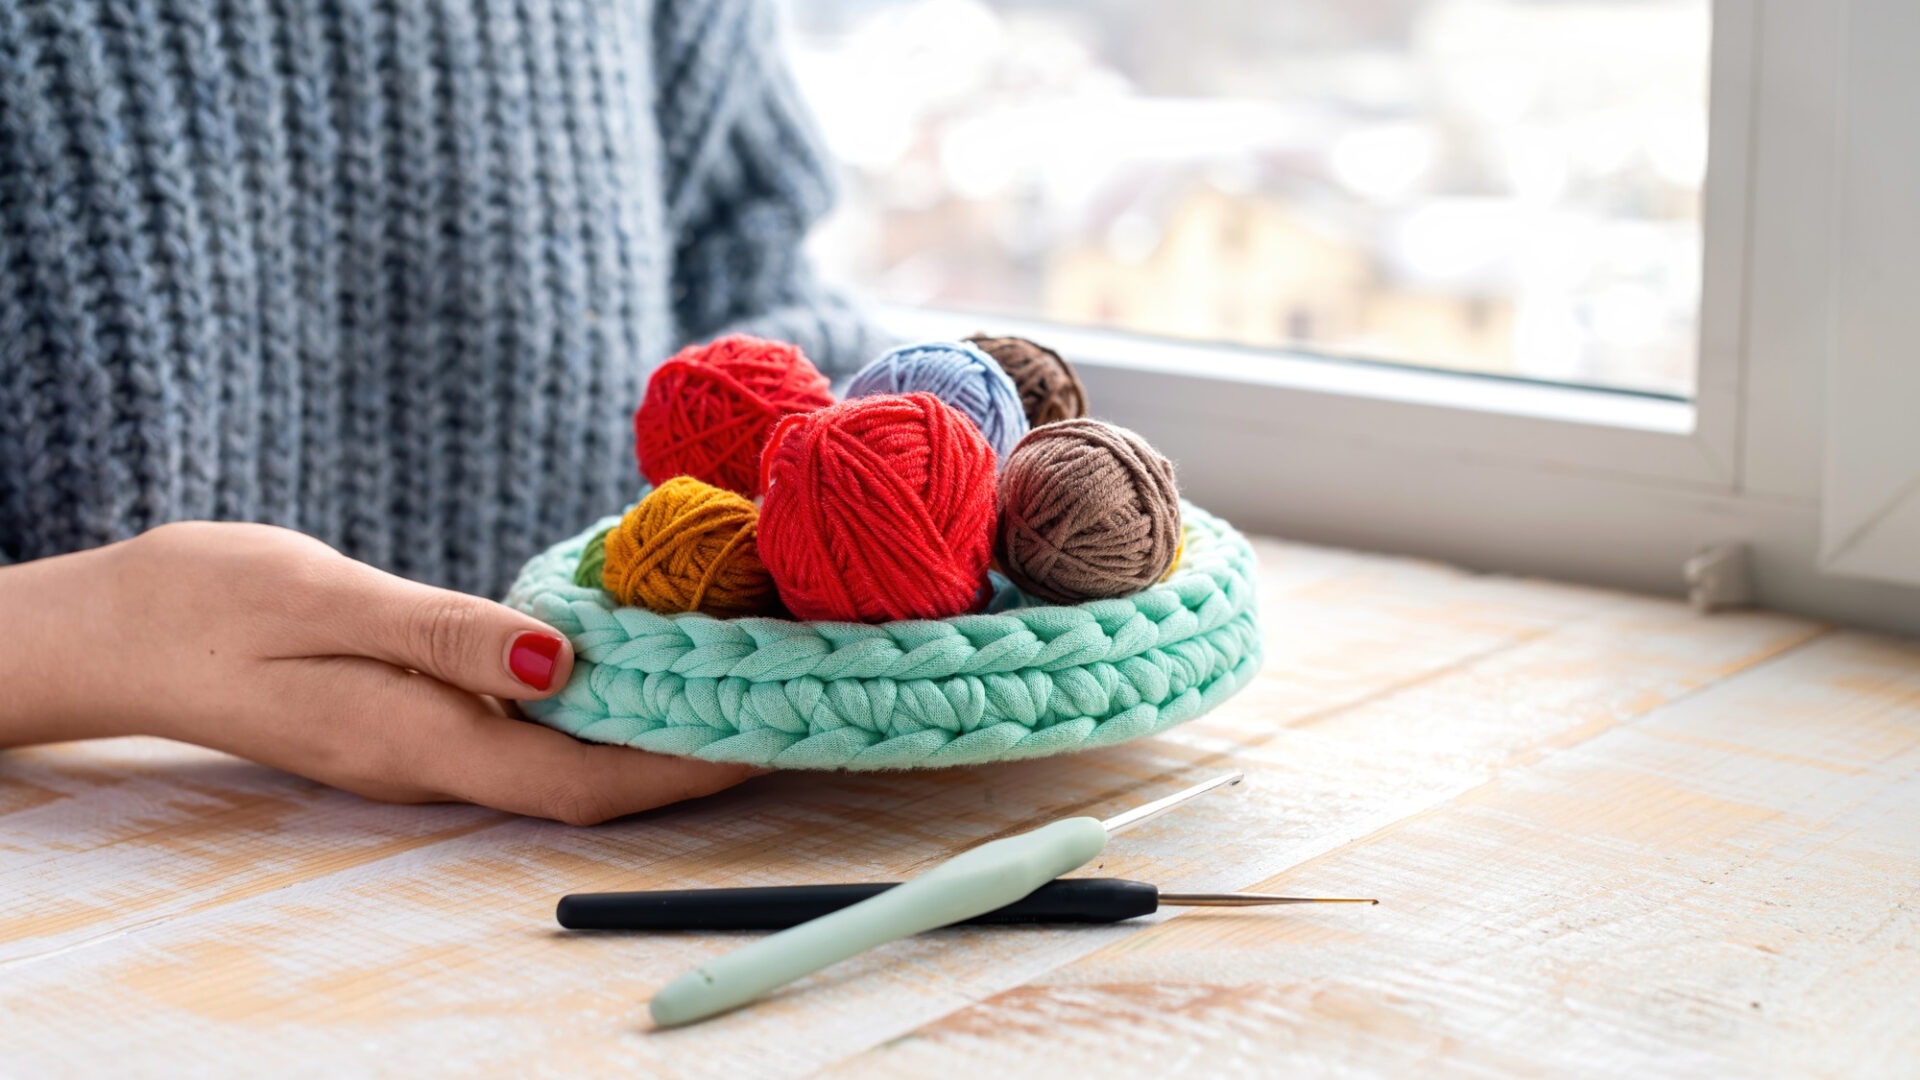 Club tricot-crochet - Courteline